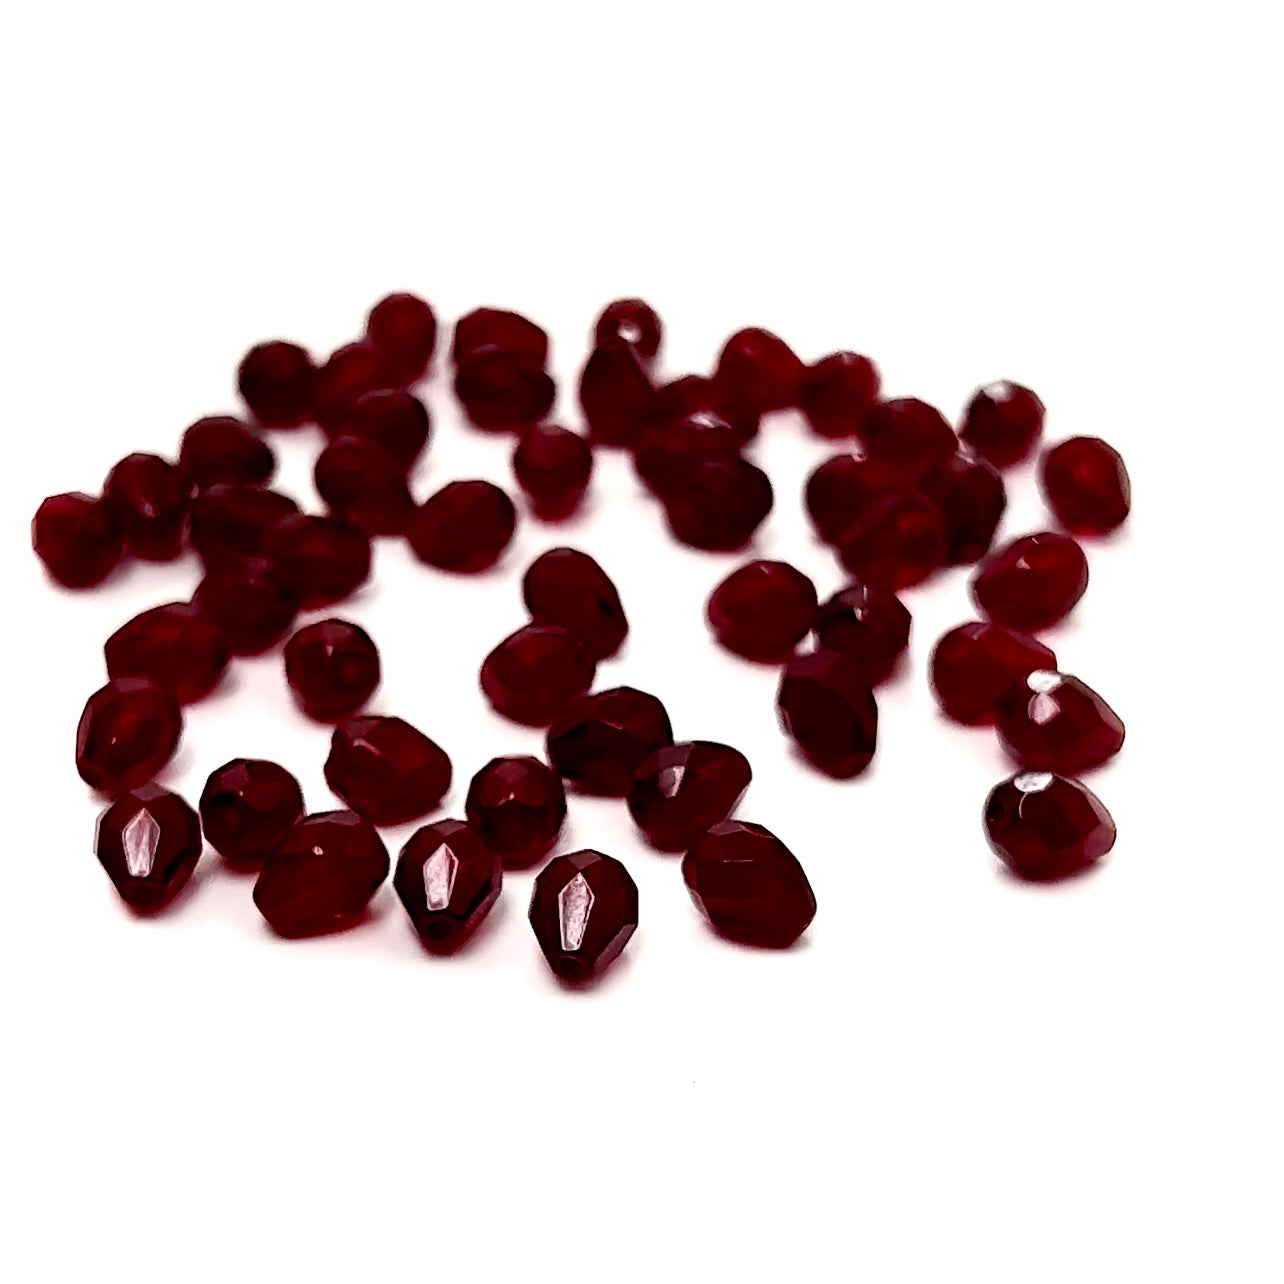 Czech Glass Pear Shaped Fire Polished Beads 9x7mm Garnet deep red Tear Drops, 50 pieces, J041